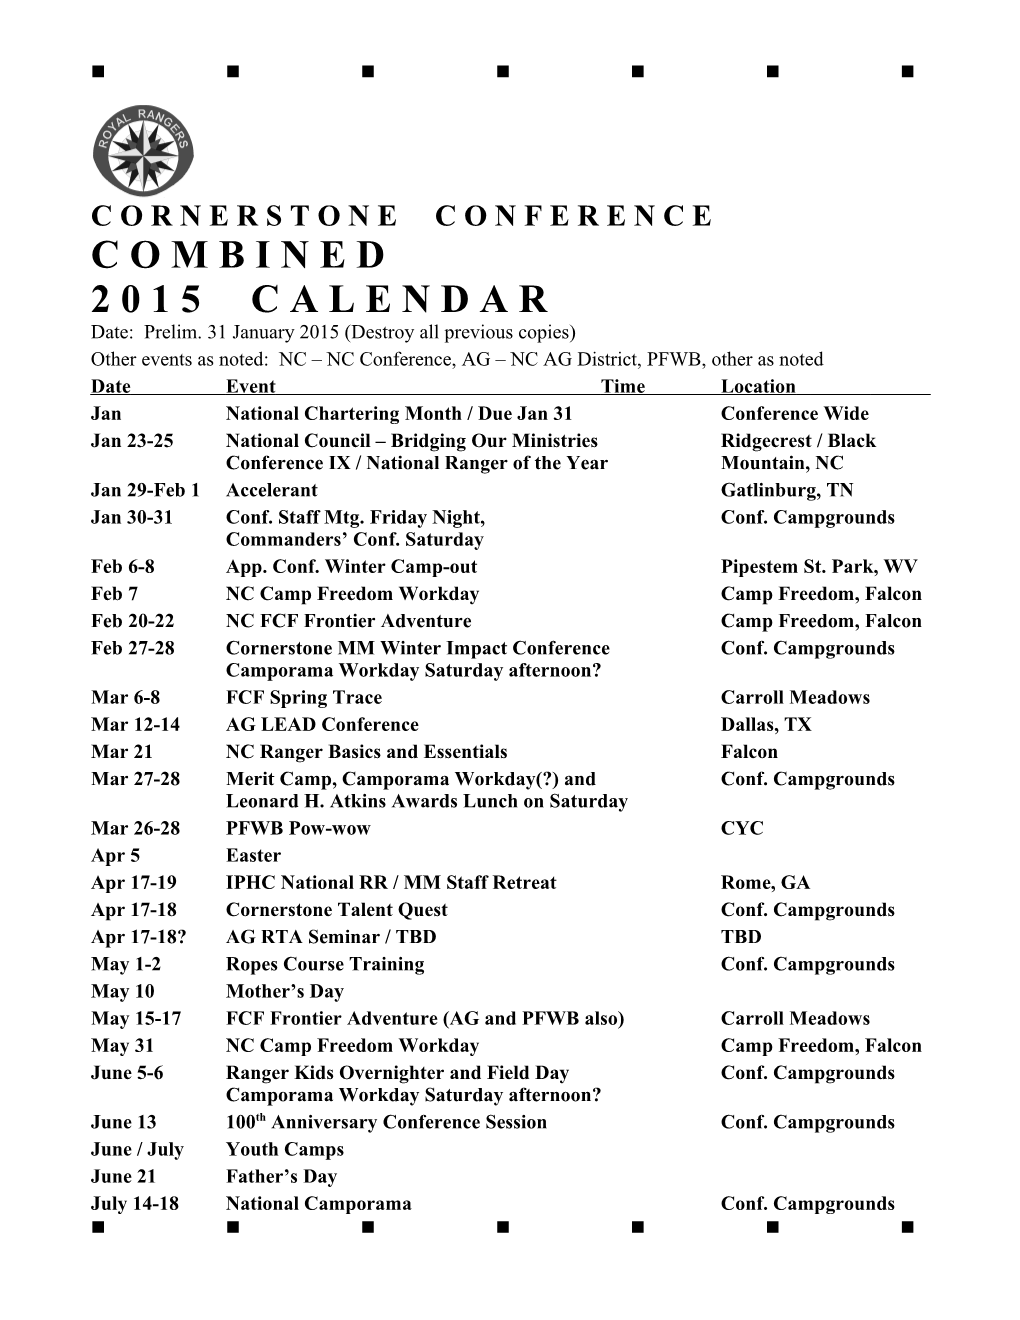 Cornerstone Conference